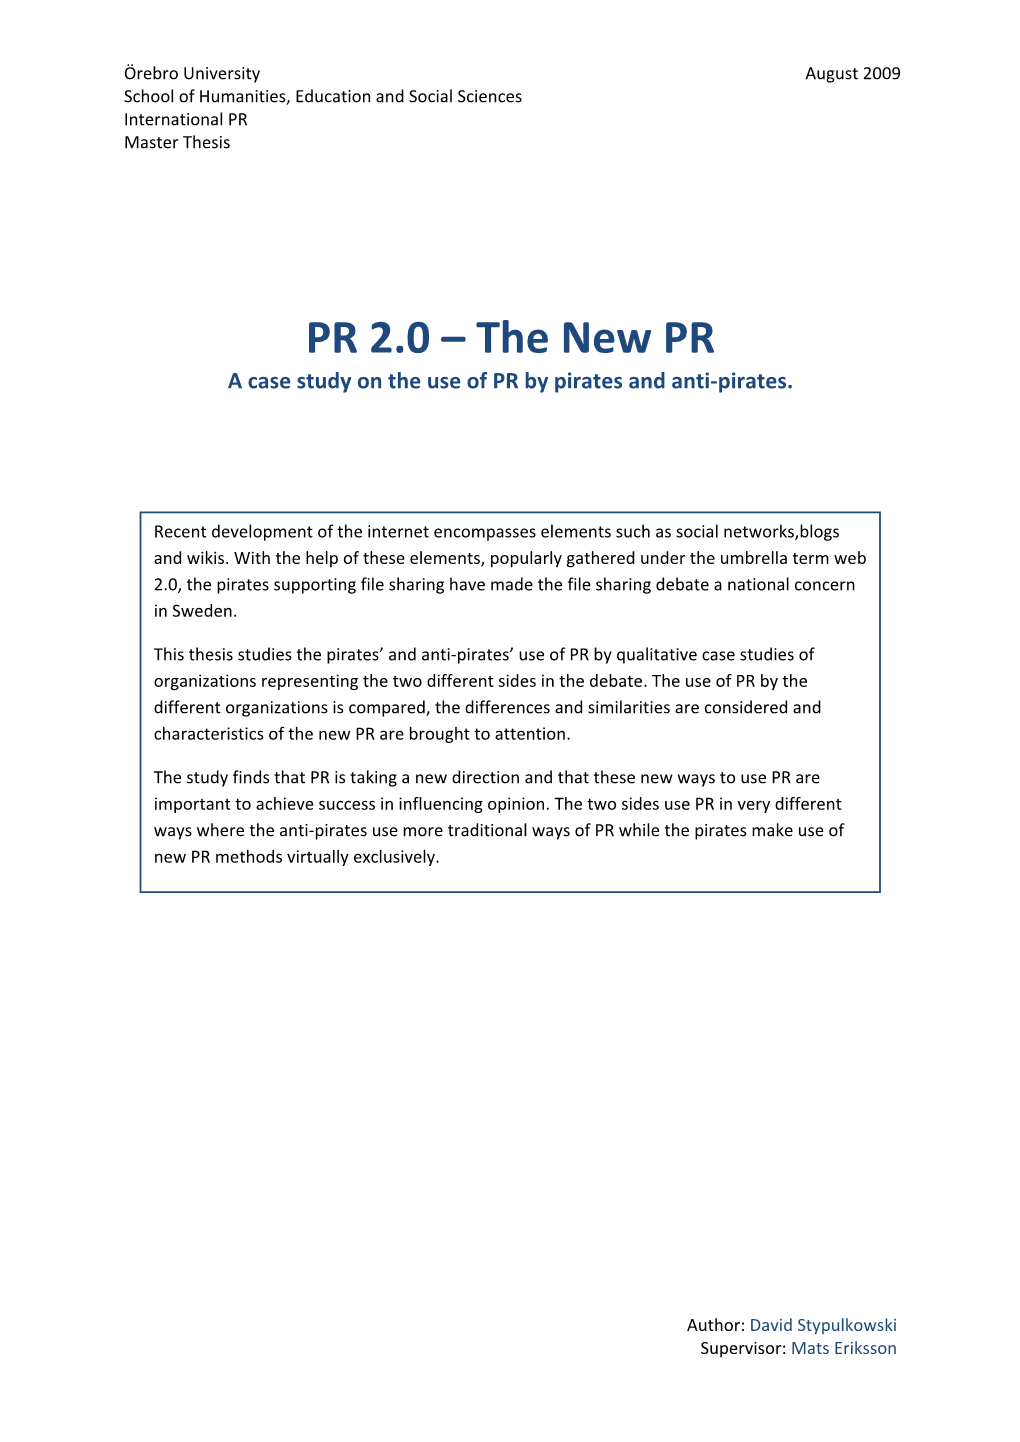 PR 2.0 – the New PR a Case Study on the Use of PR by Pirates and Anti-Pirates